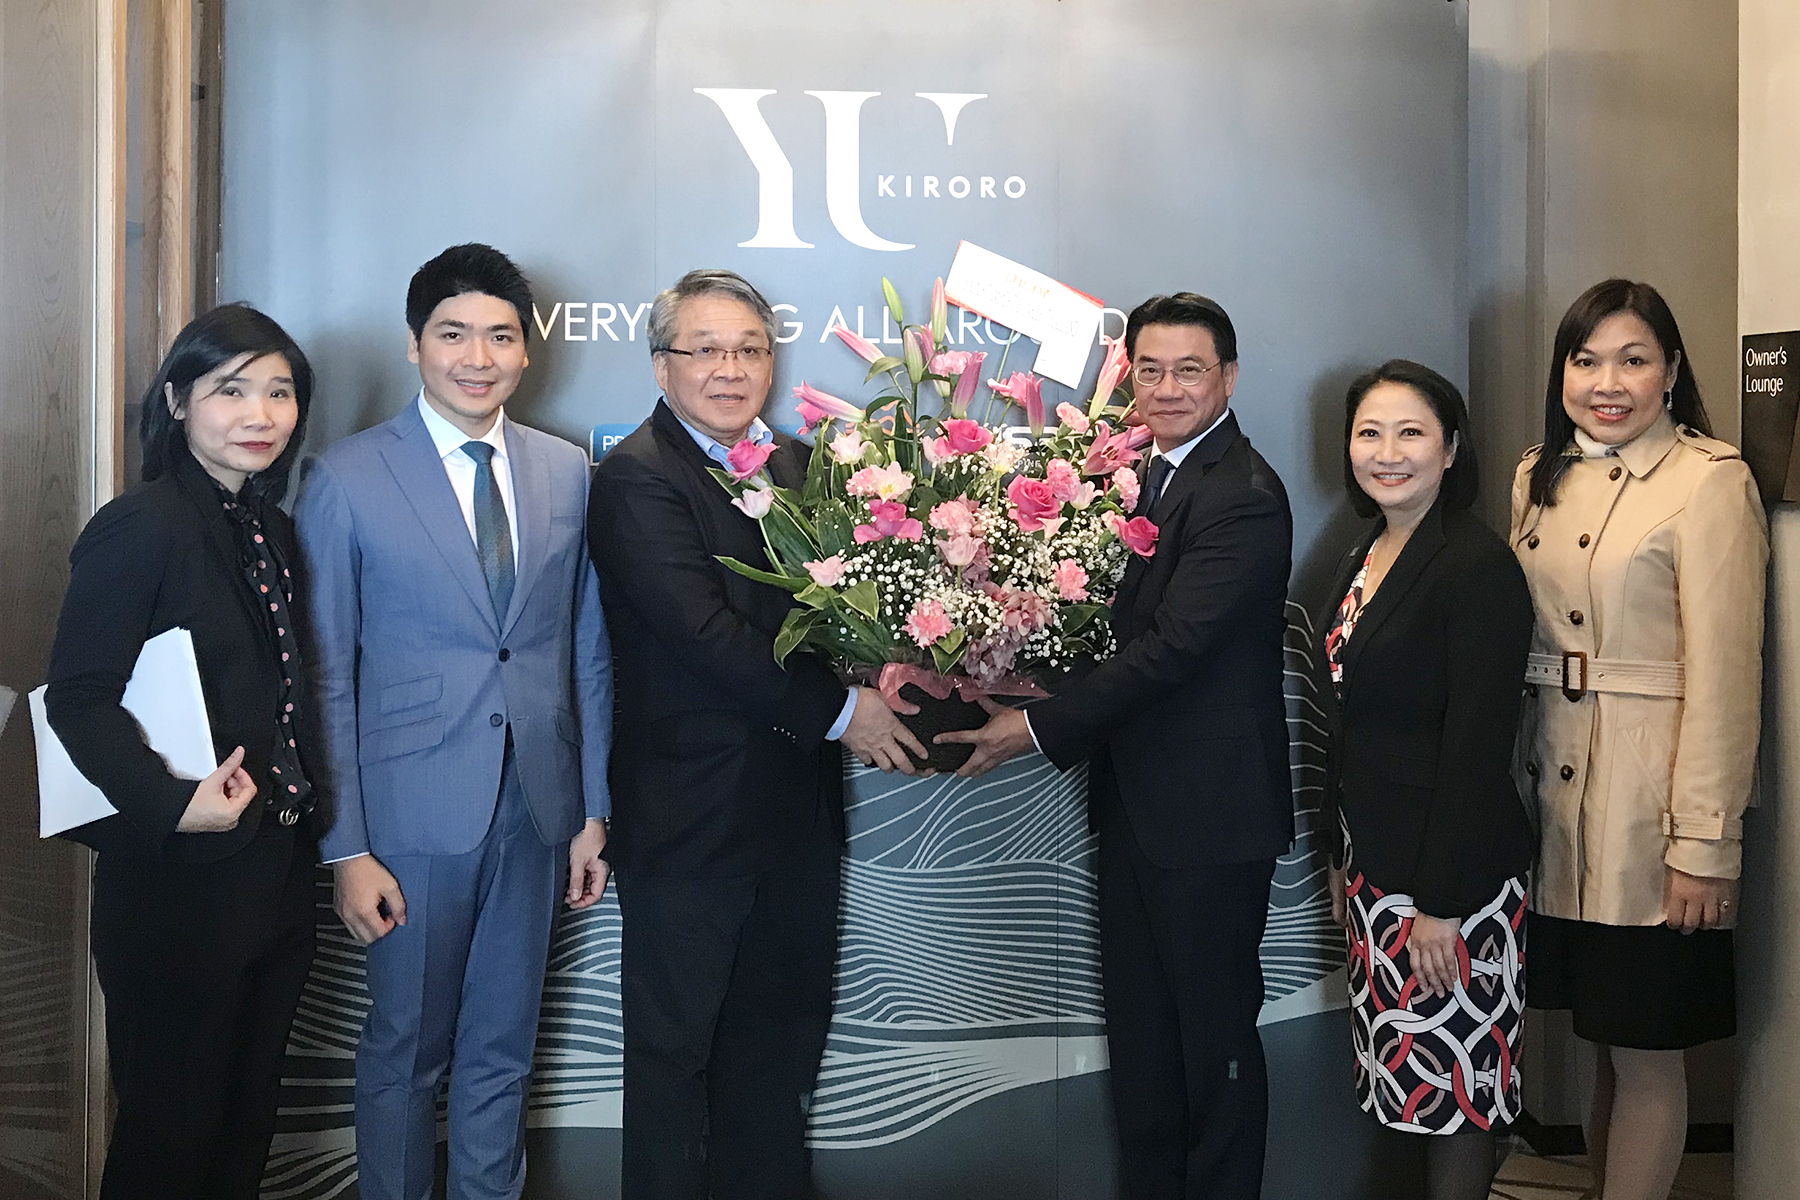 EXIM Thailand Congratulates Property Perfect Plc. on the Grand Opening of Ski Resort Condominium Project “Yu Kiroro” in Japan